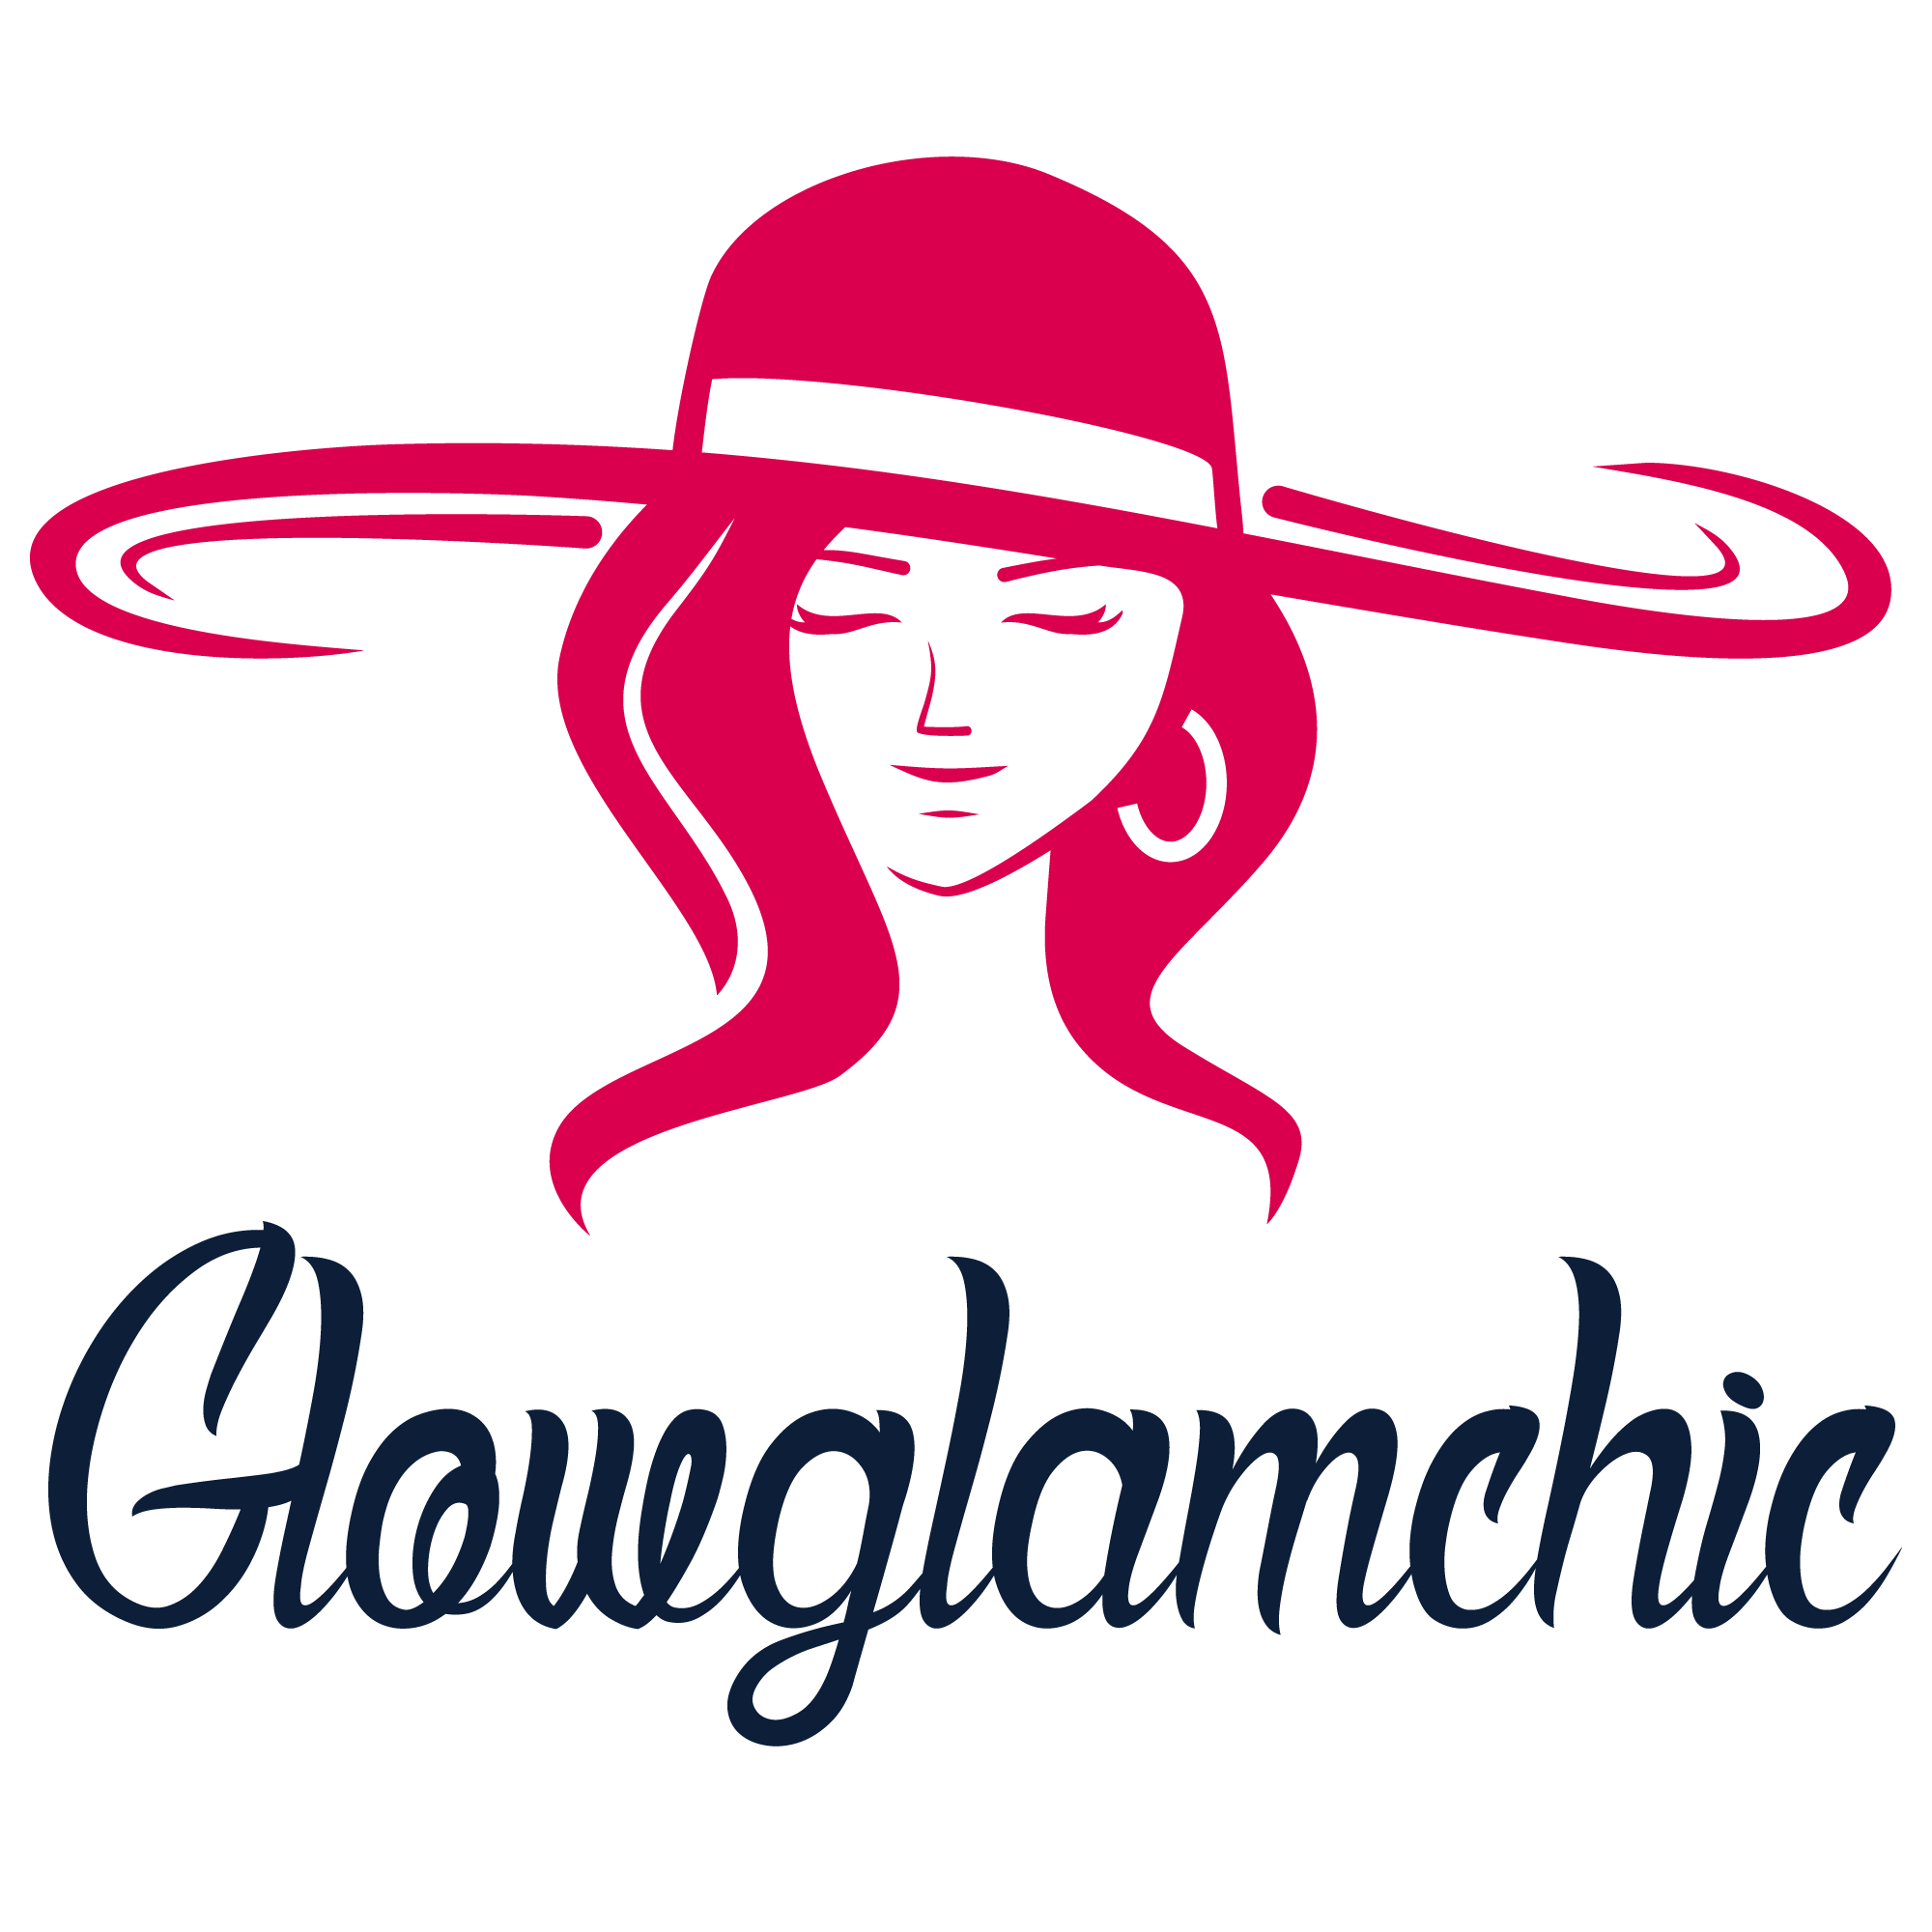 Glowglamchic